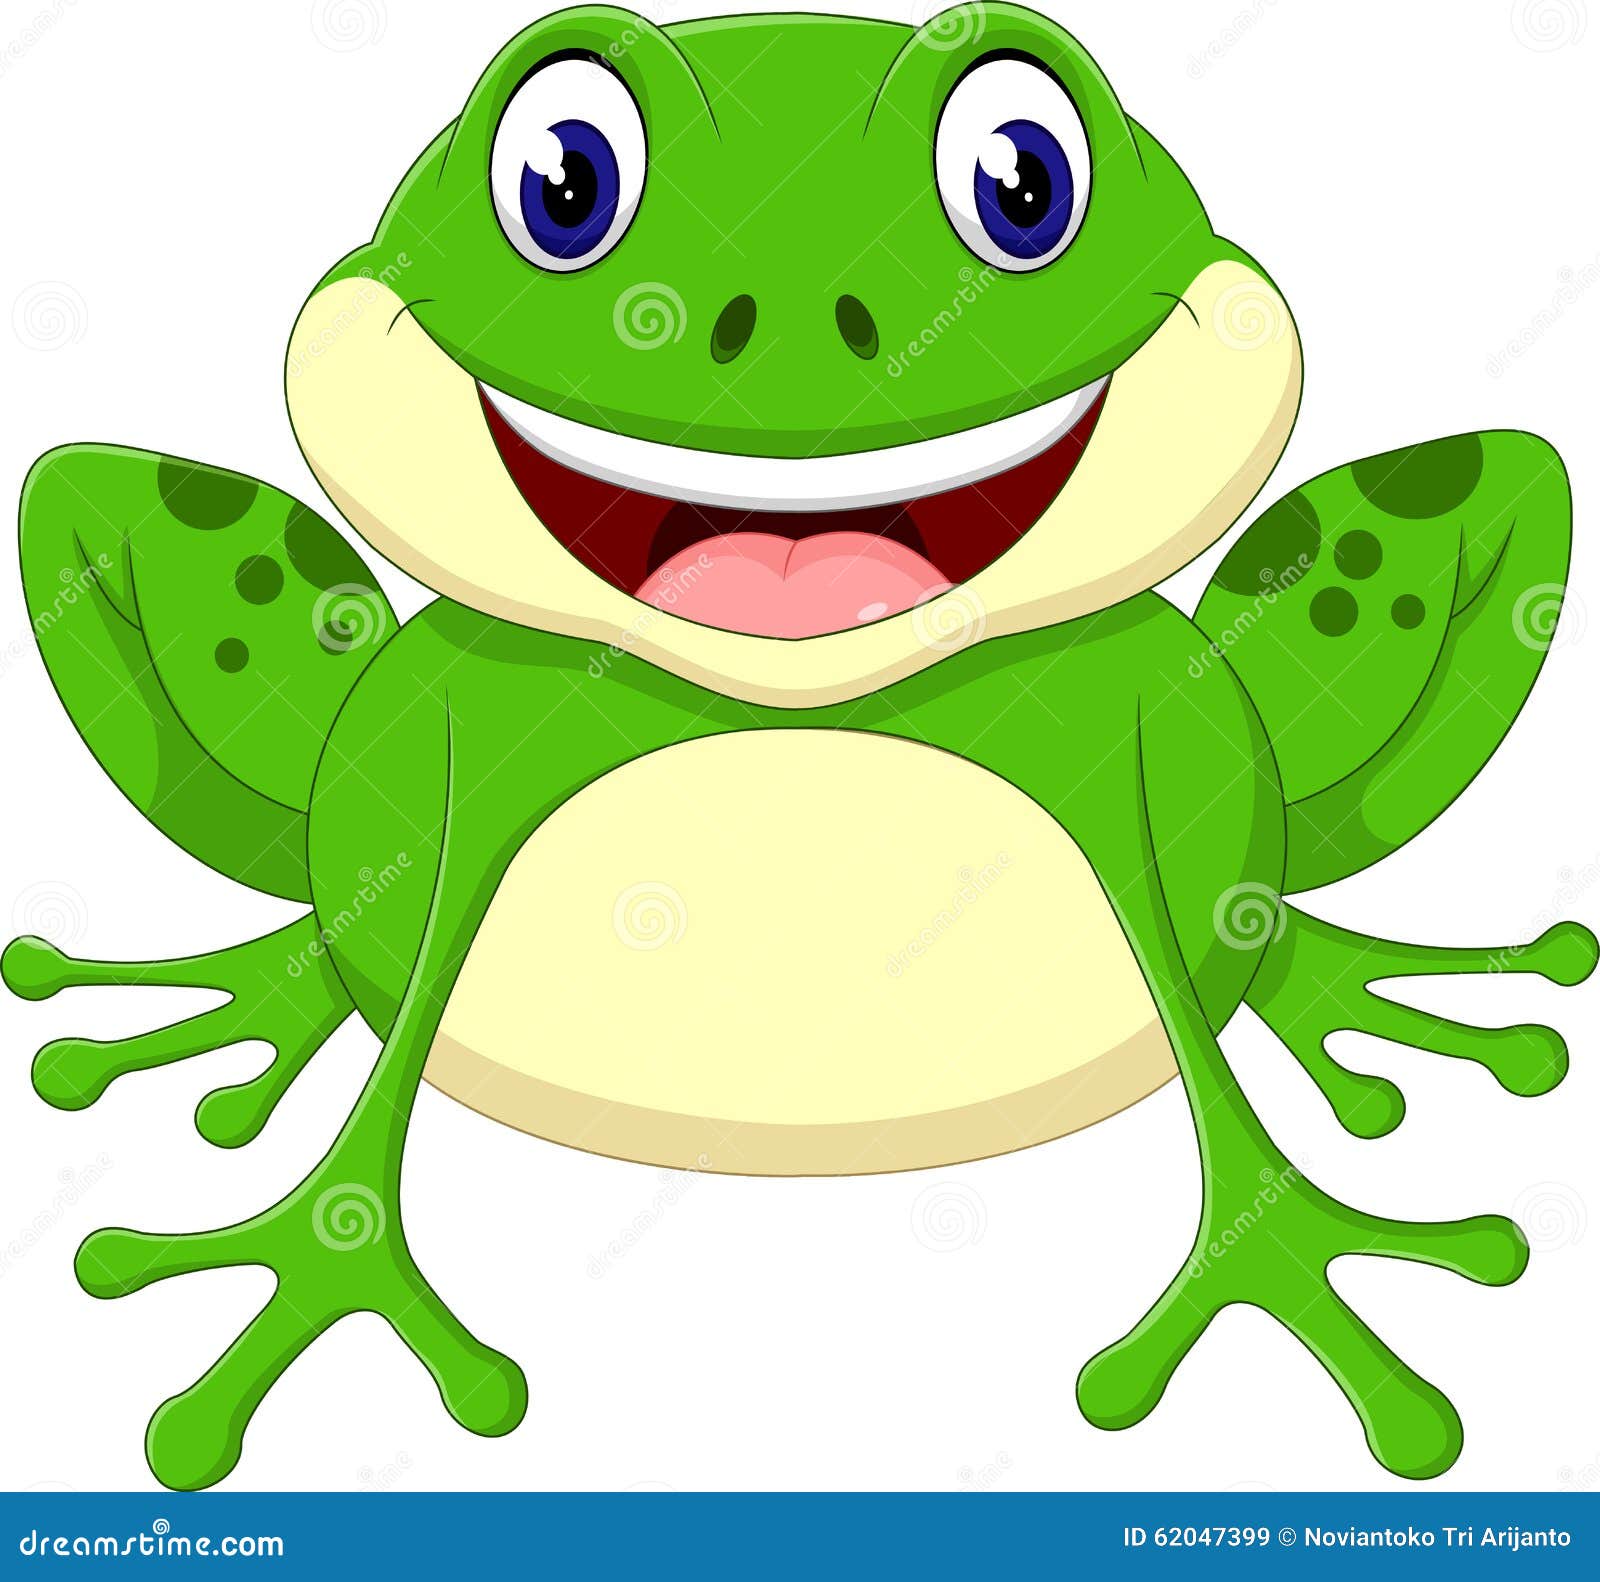 Cartoon Cute Frog Stock Vector - Image: 62047399